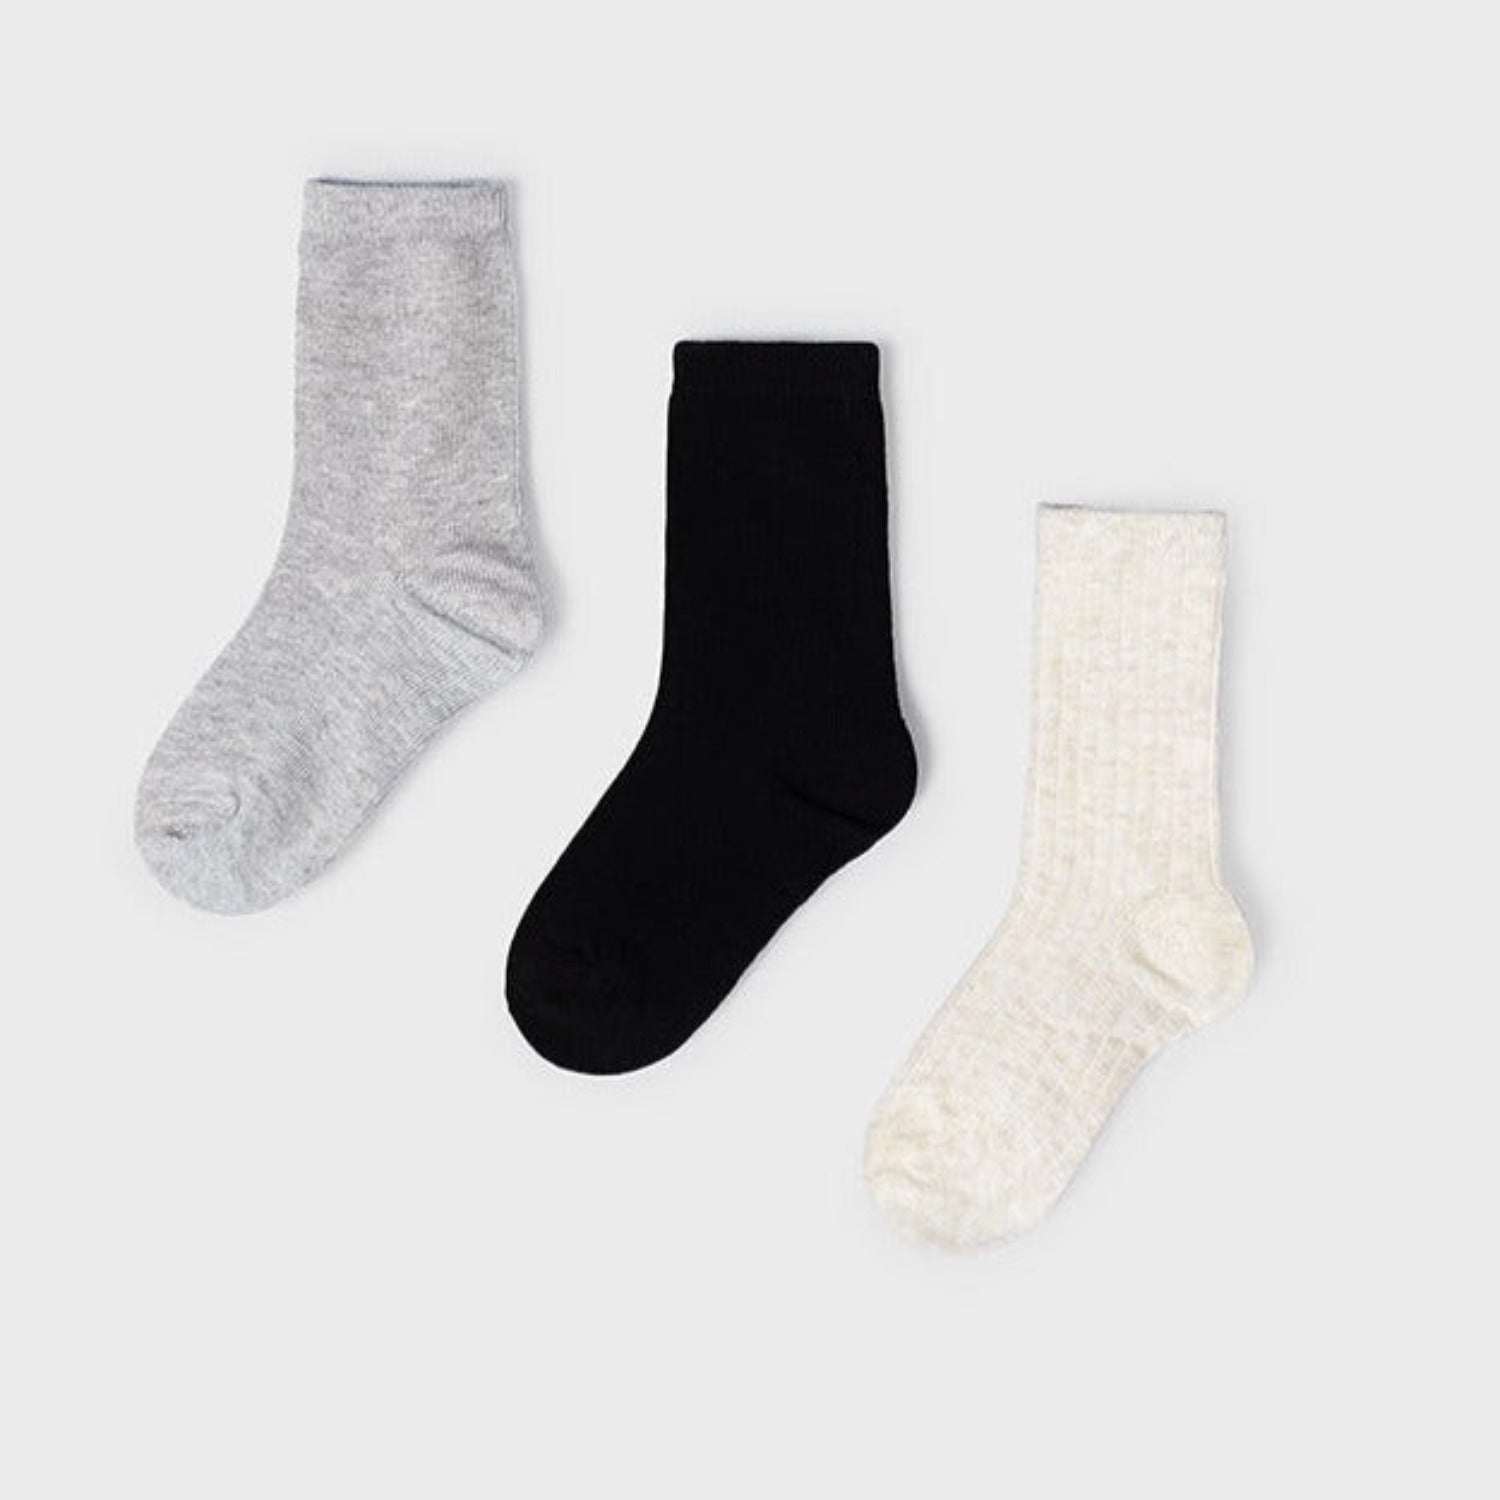 3 Pack Socks, Grey, Black, Cream